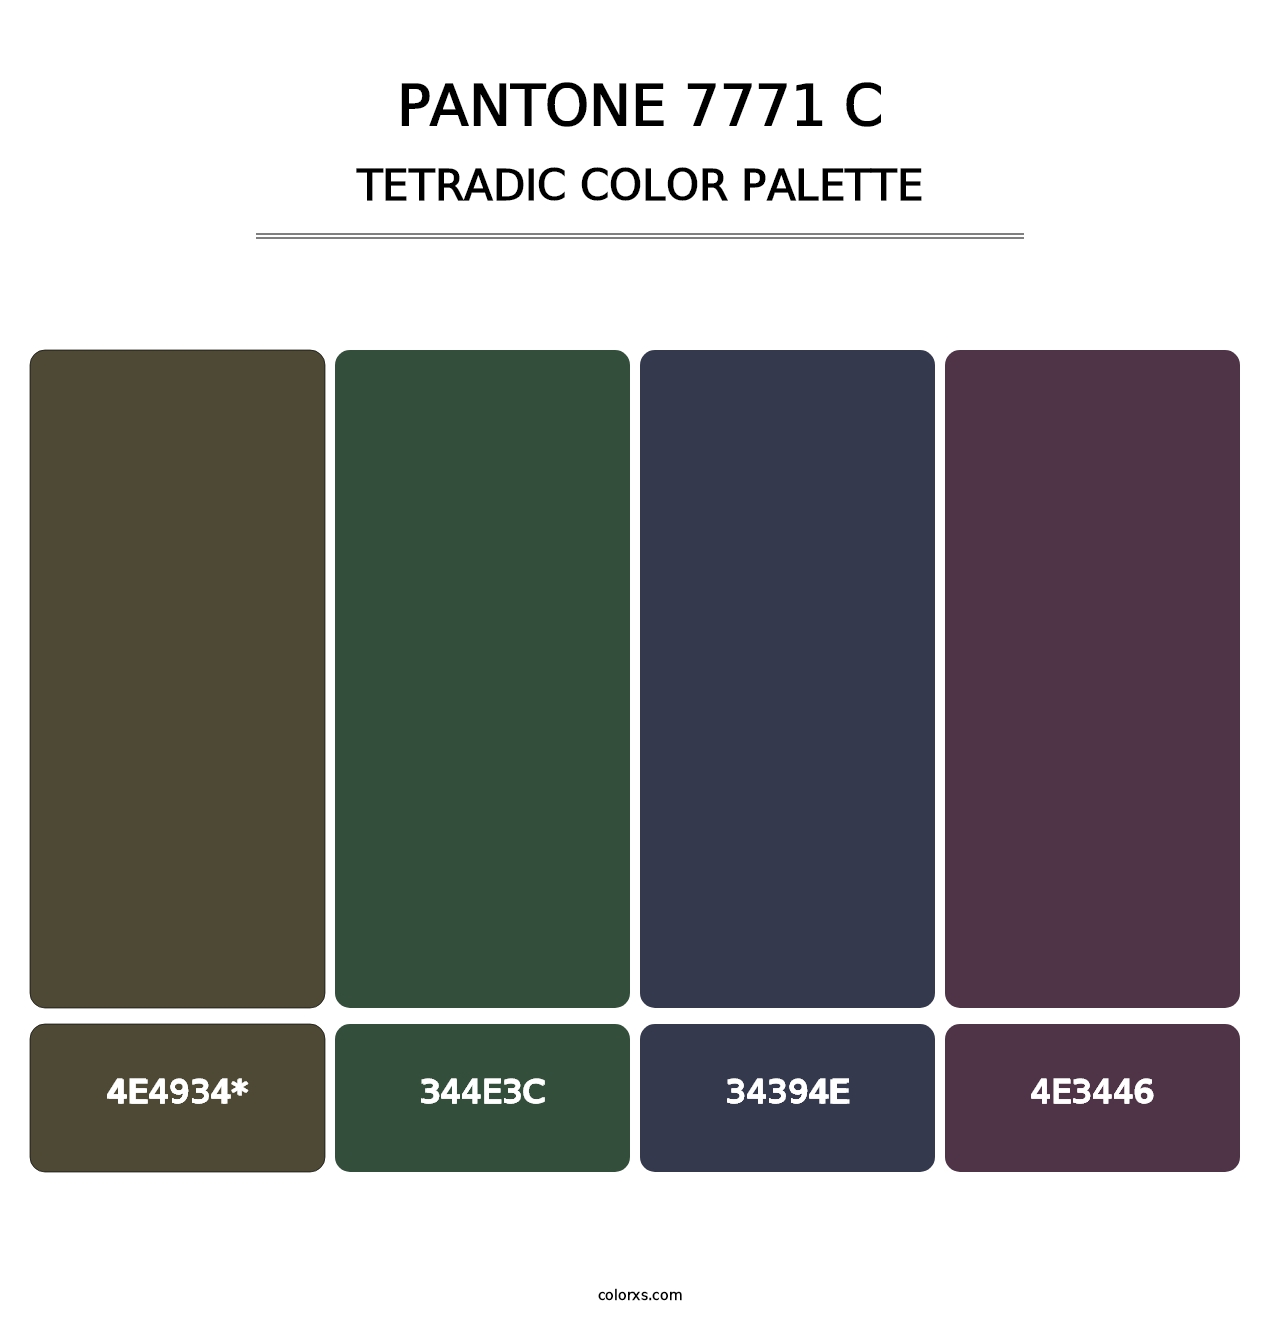 PANTONE 7771 C - Tetradic Color Palette